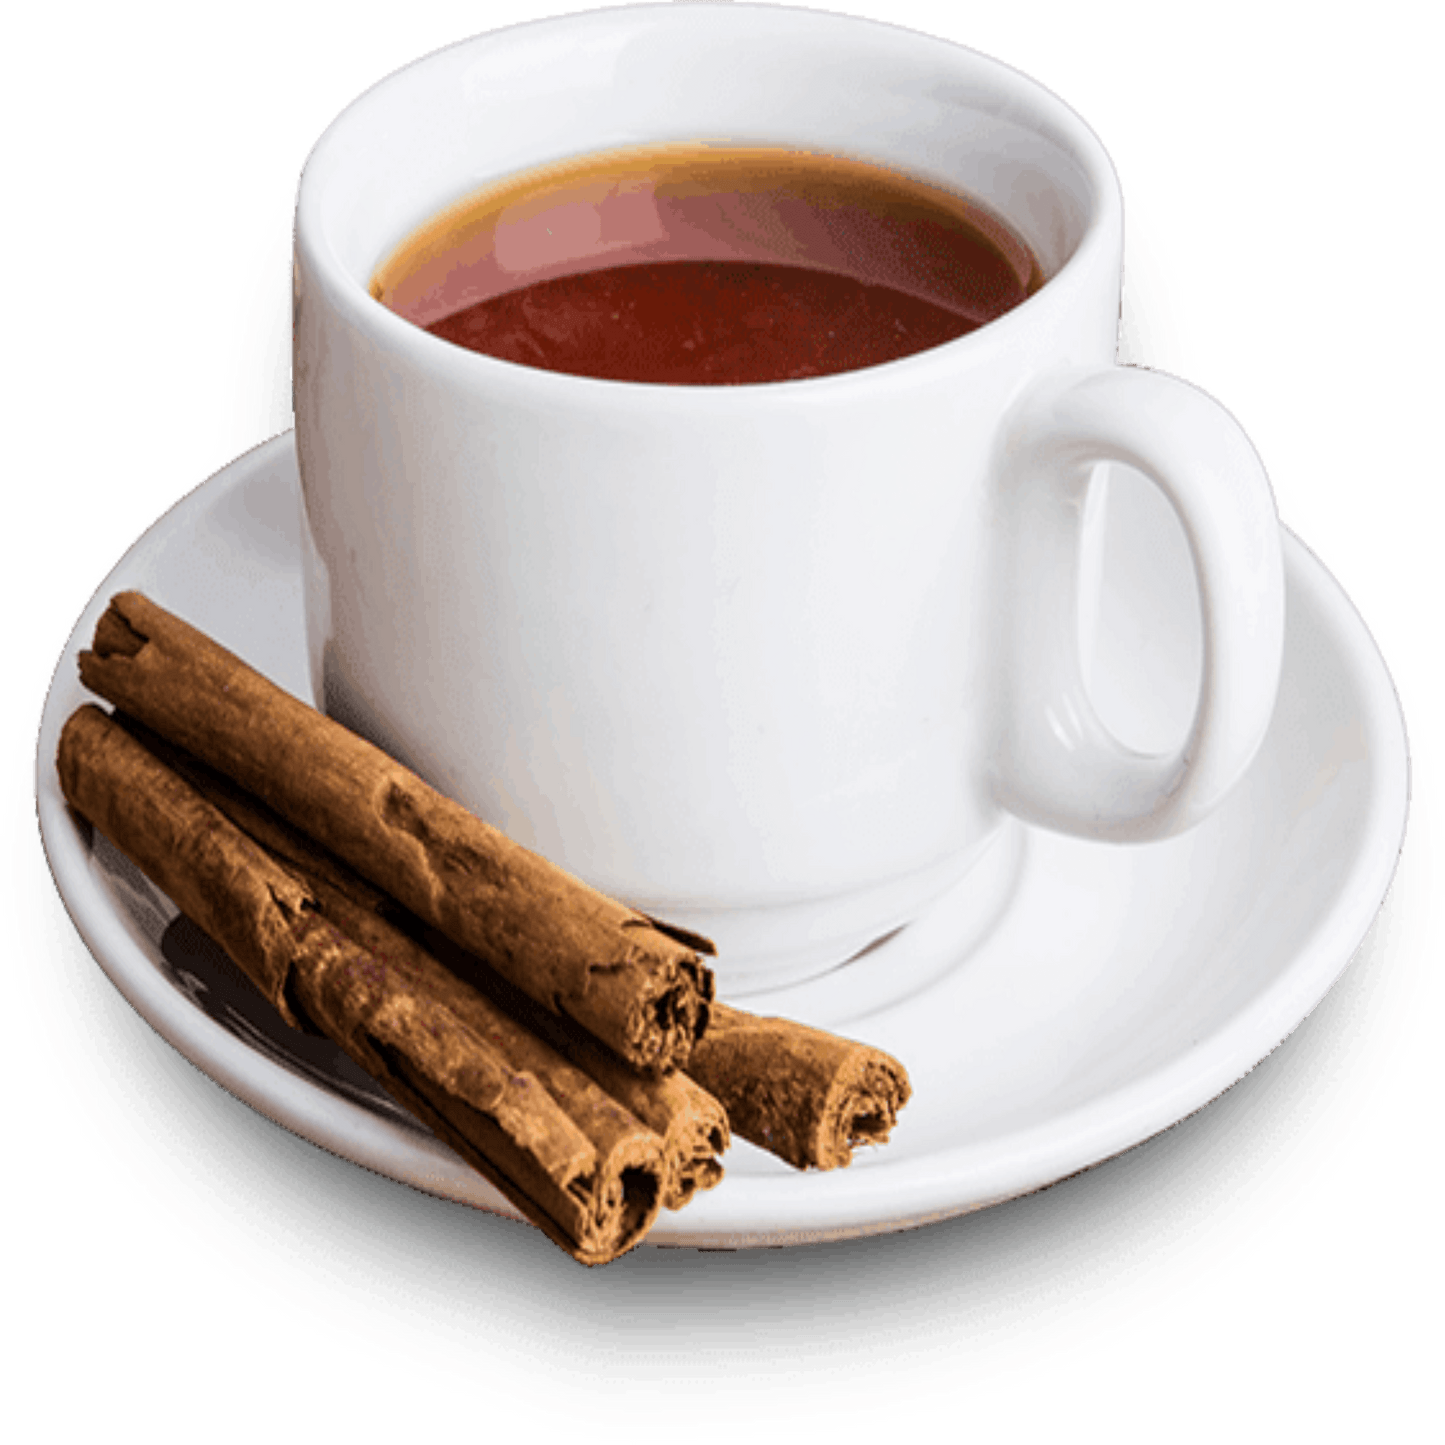 Namhya Heart Tea - For High BP, Cholesterol and Overall Heart Health